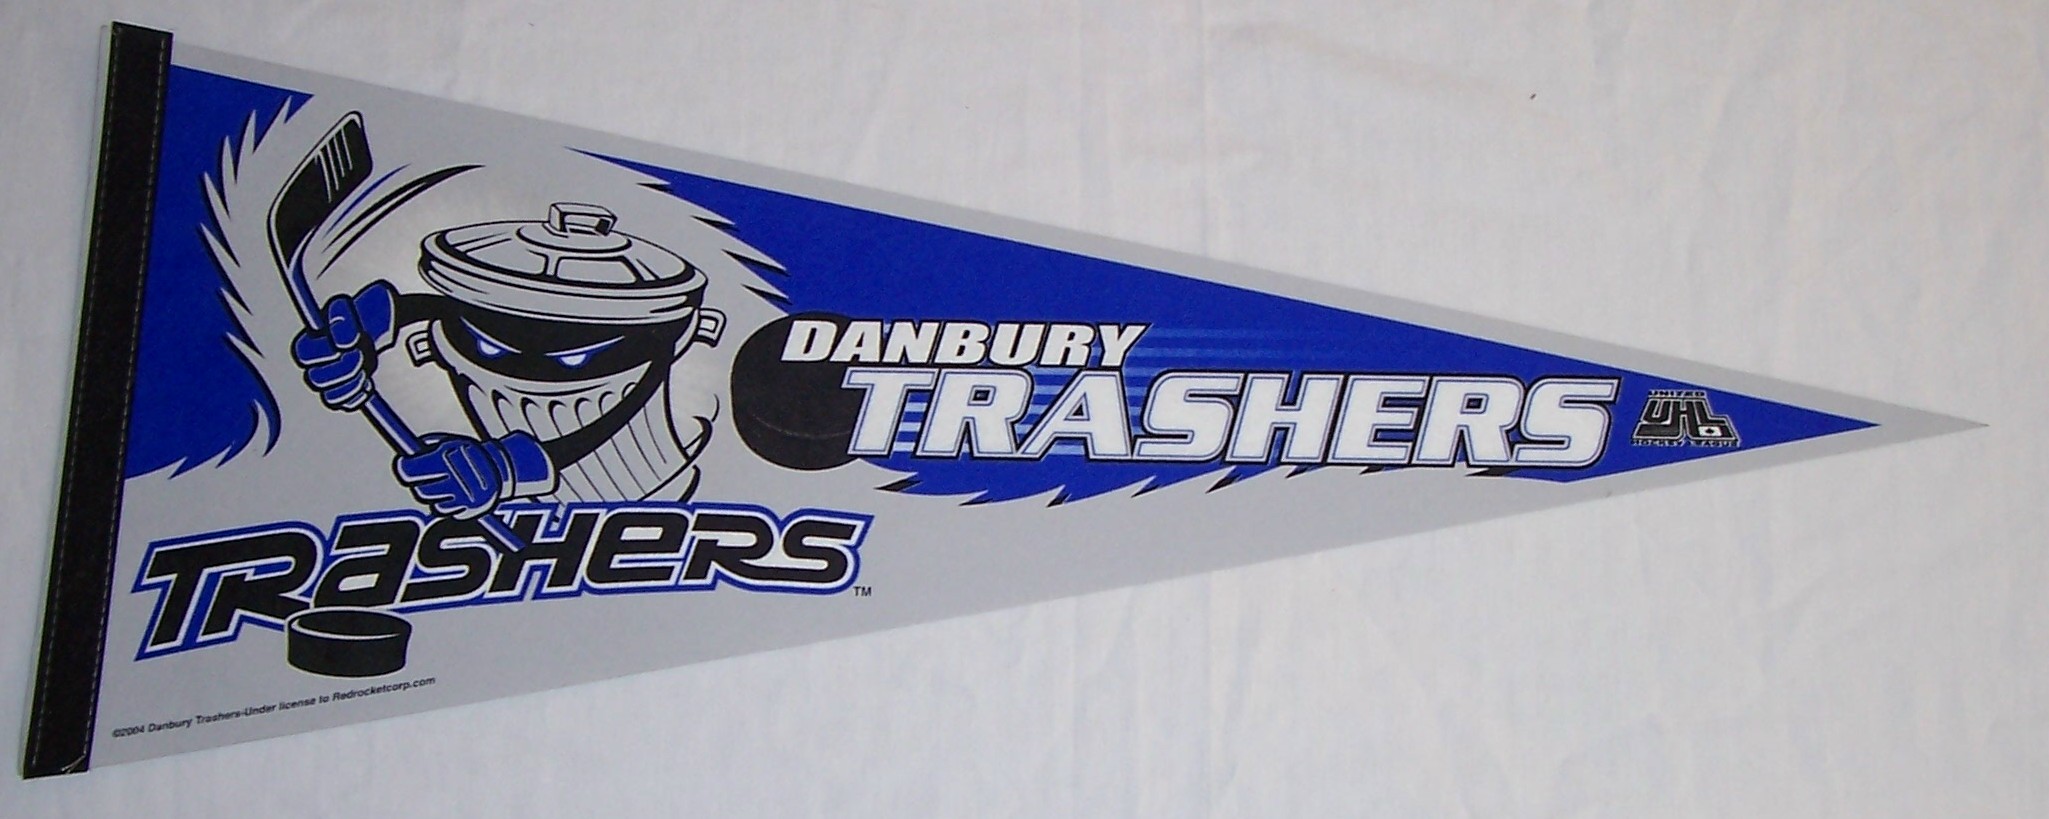 UHL - Danbury Trashers vs. Quad City Mallards 